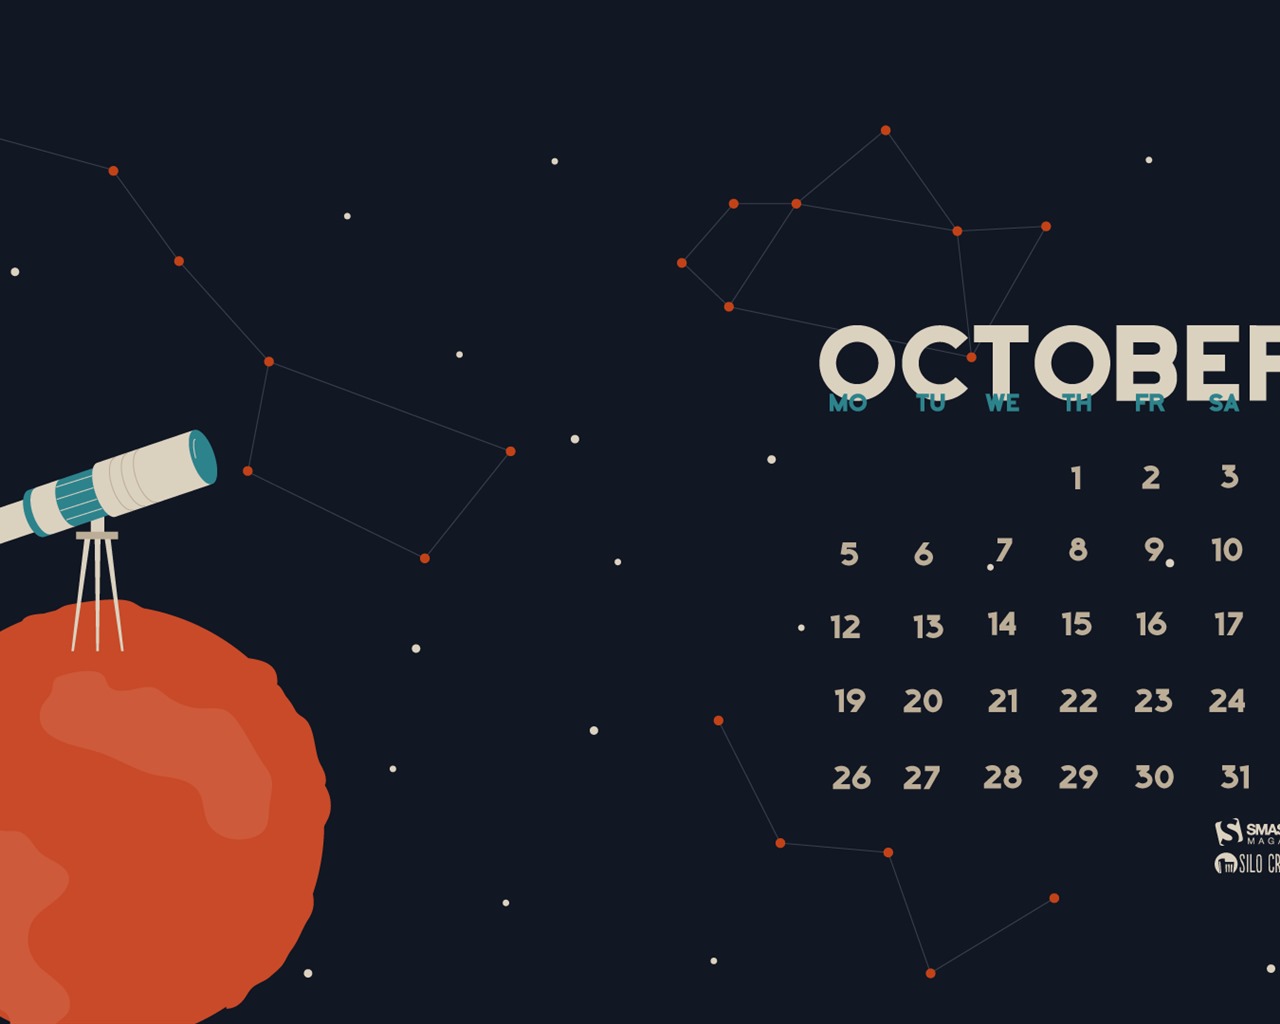 October 2015 calendar wallpaper (2) #9 - 1280x1024